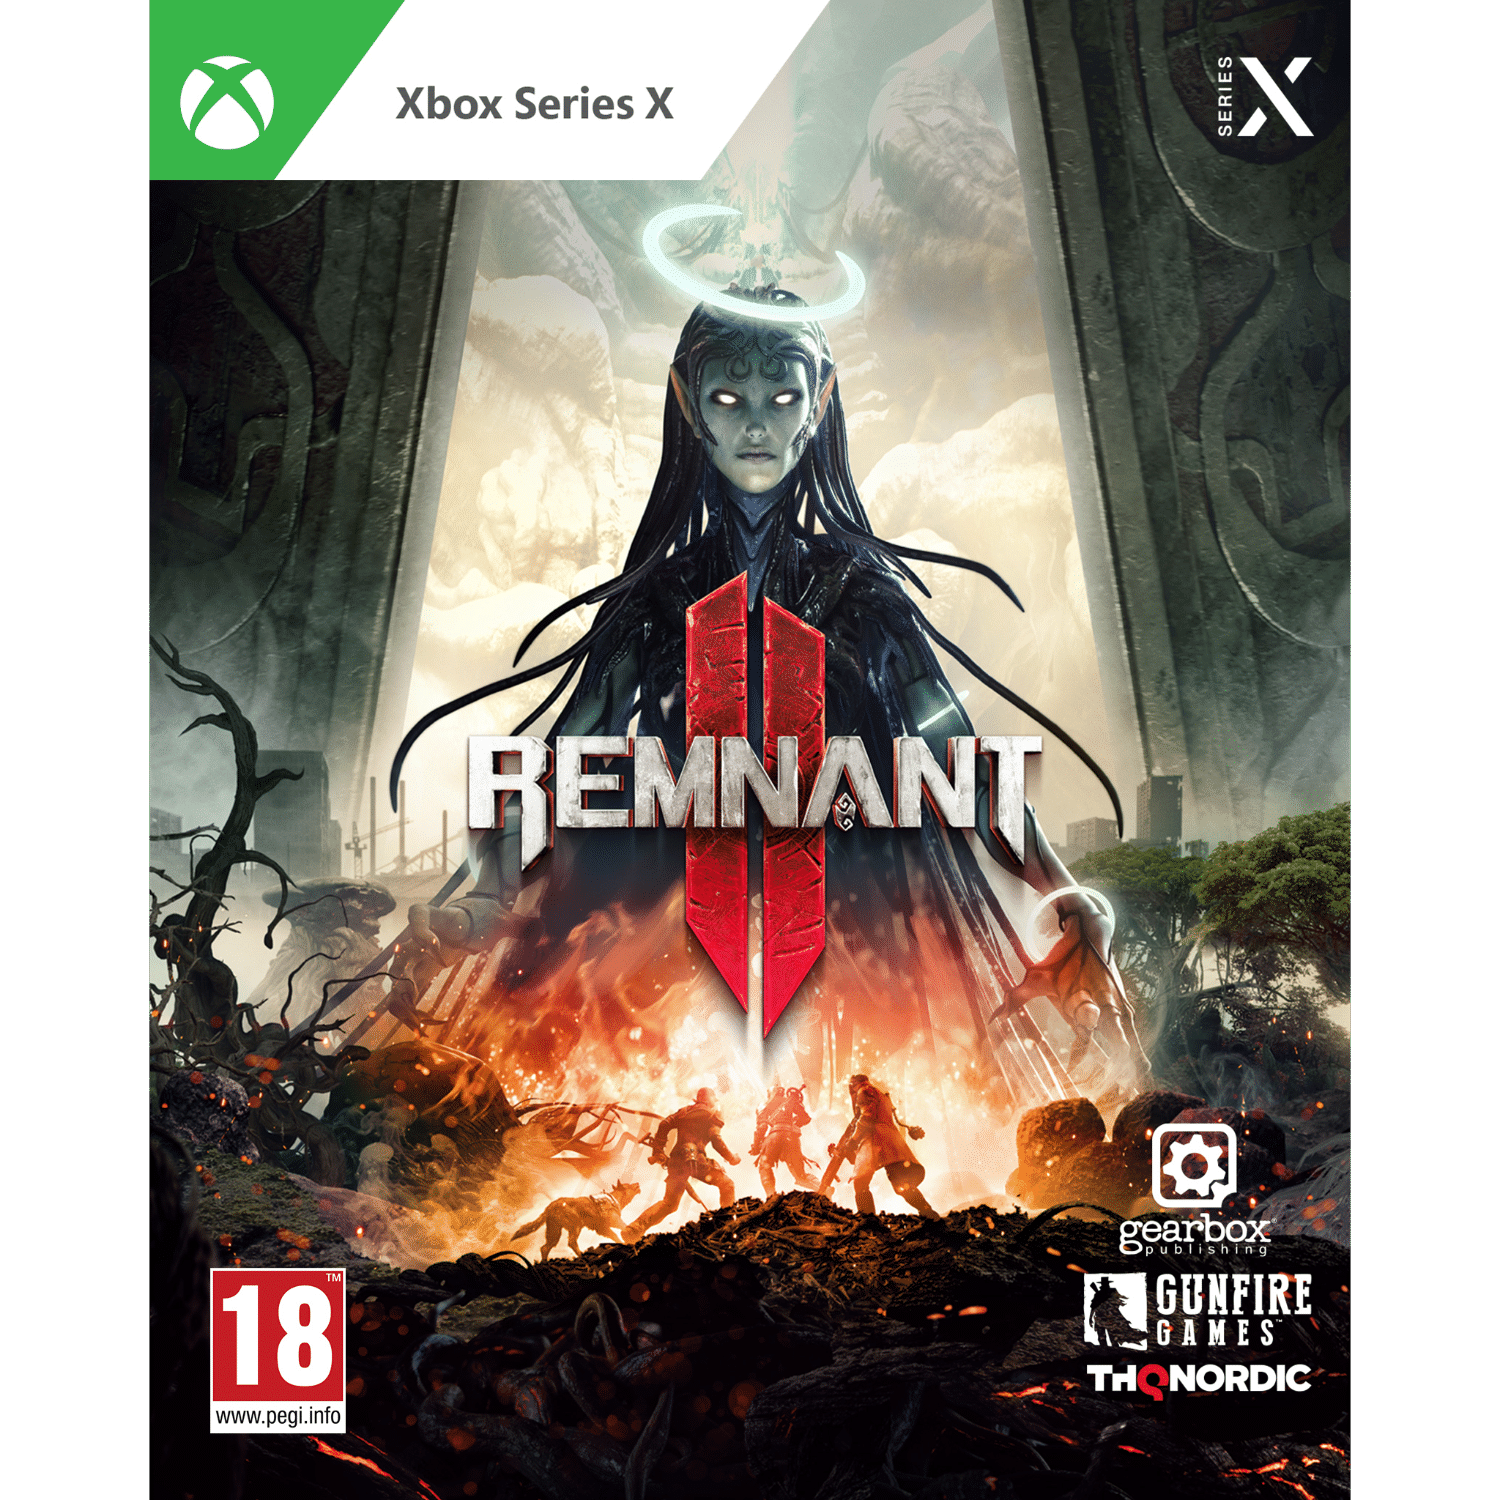 Remnant 2 Xbox Series X